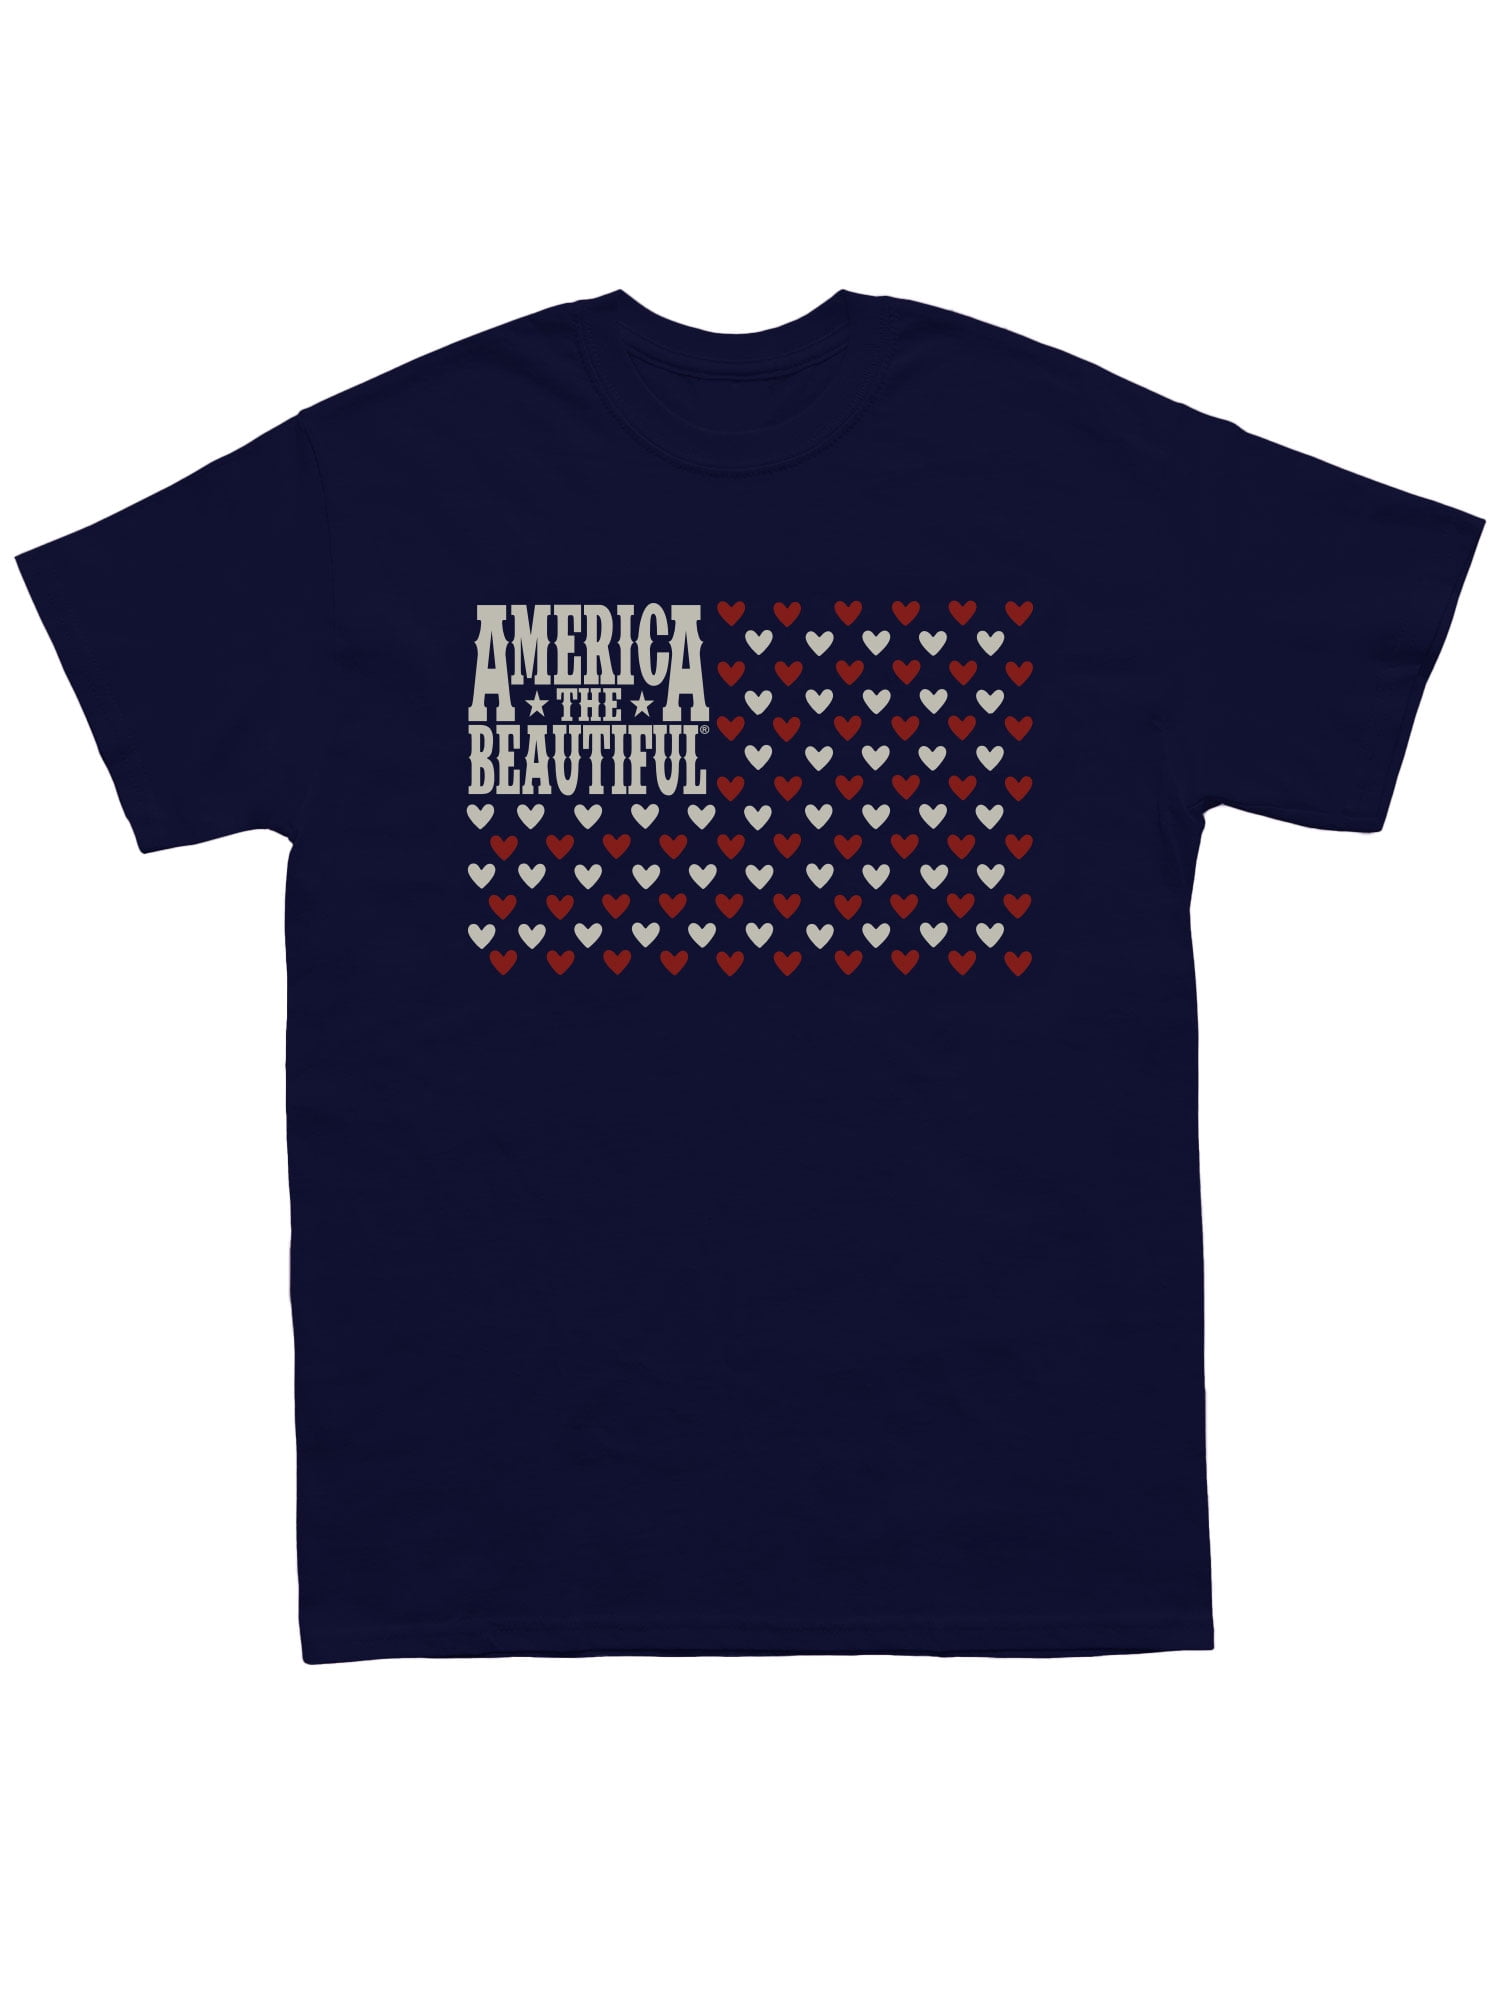 Mens long sleeve American Flag Tshirt 'Resilience' graphic sizes Sm-4XL